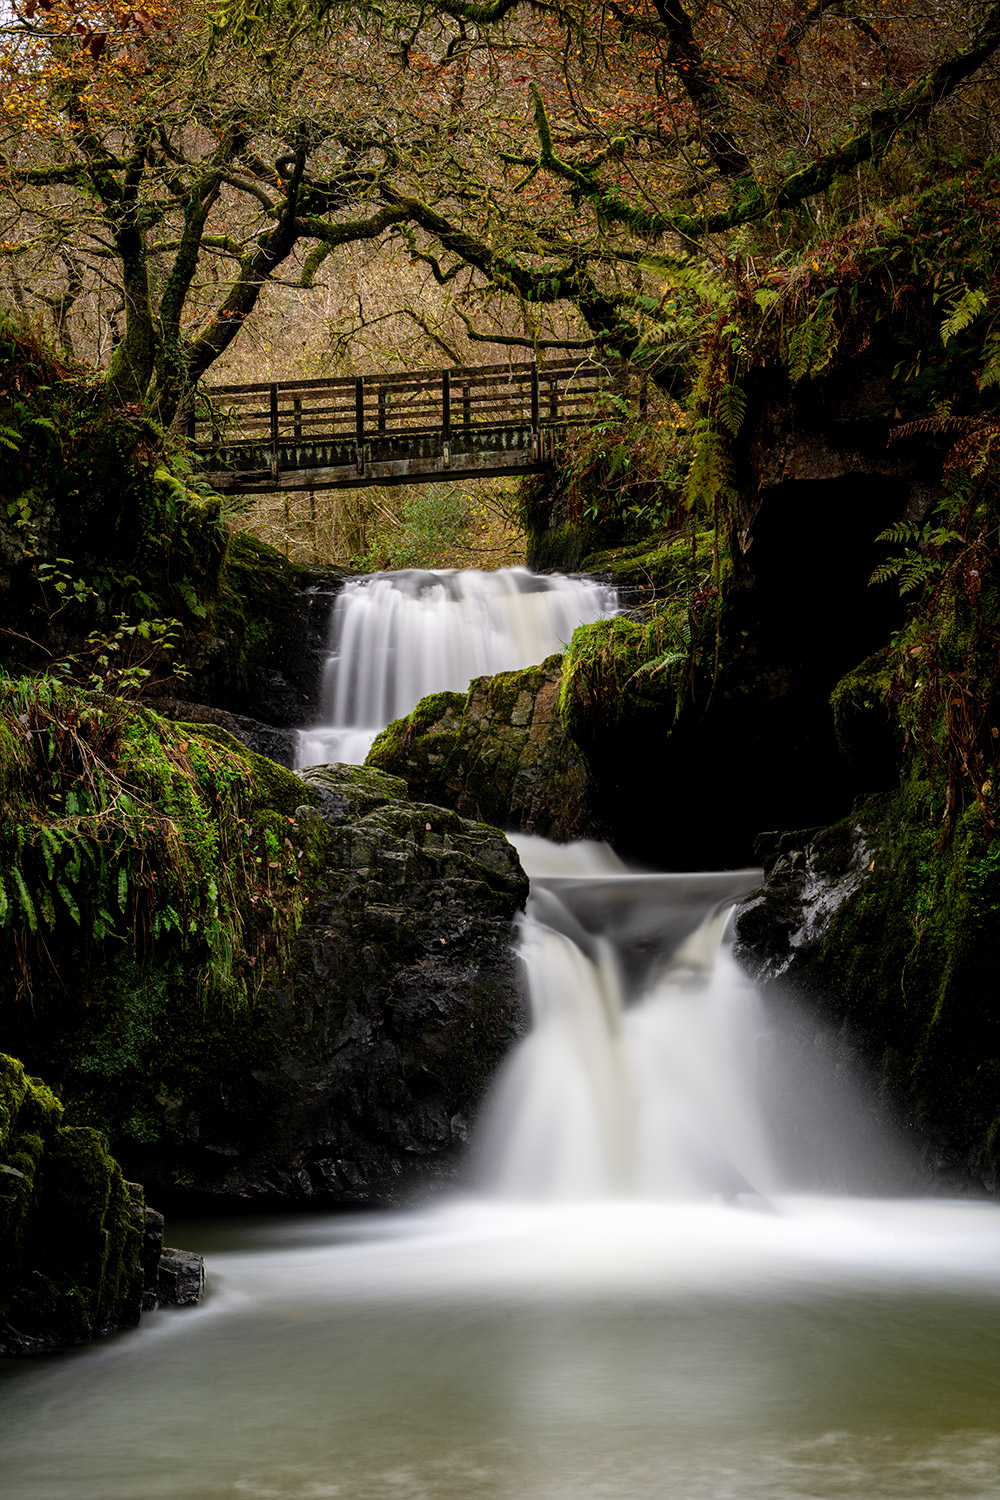 Craig y Ddinas, Wales. Waterfall in Autumn